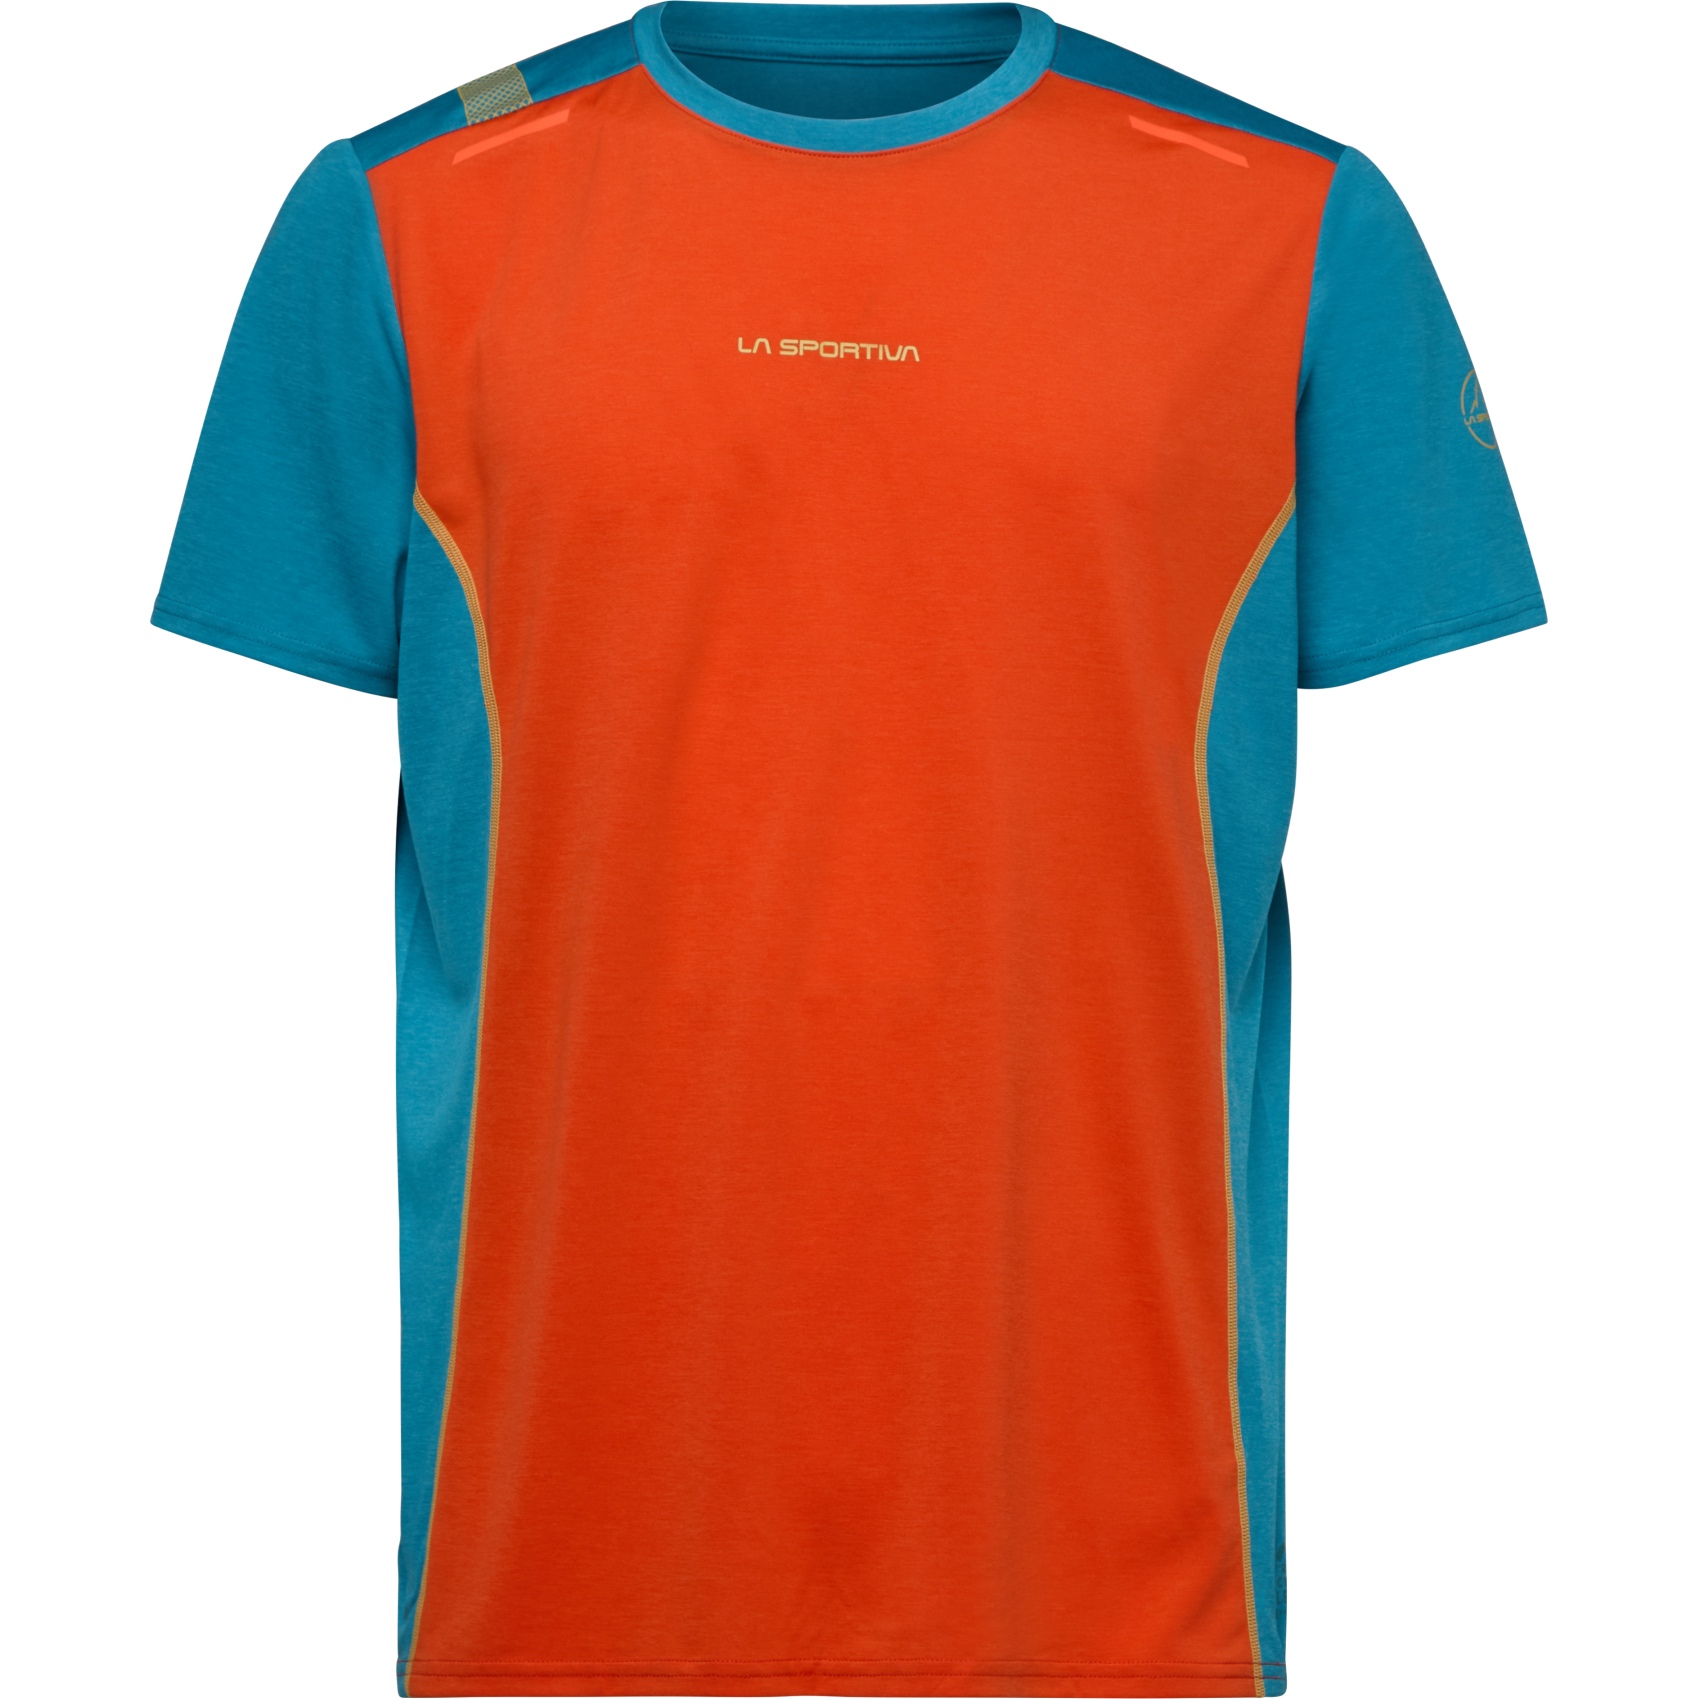 Productfoto van La Sportiva Tracer T-Shirt Heren - Cherry Tomato/Tropic Blue